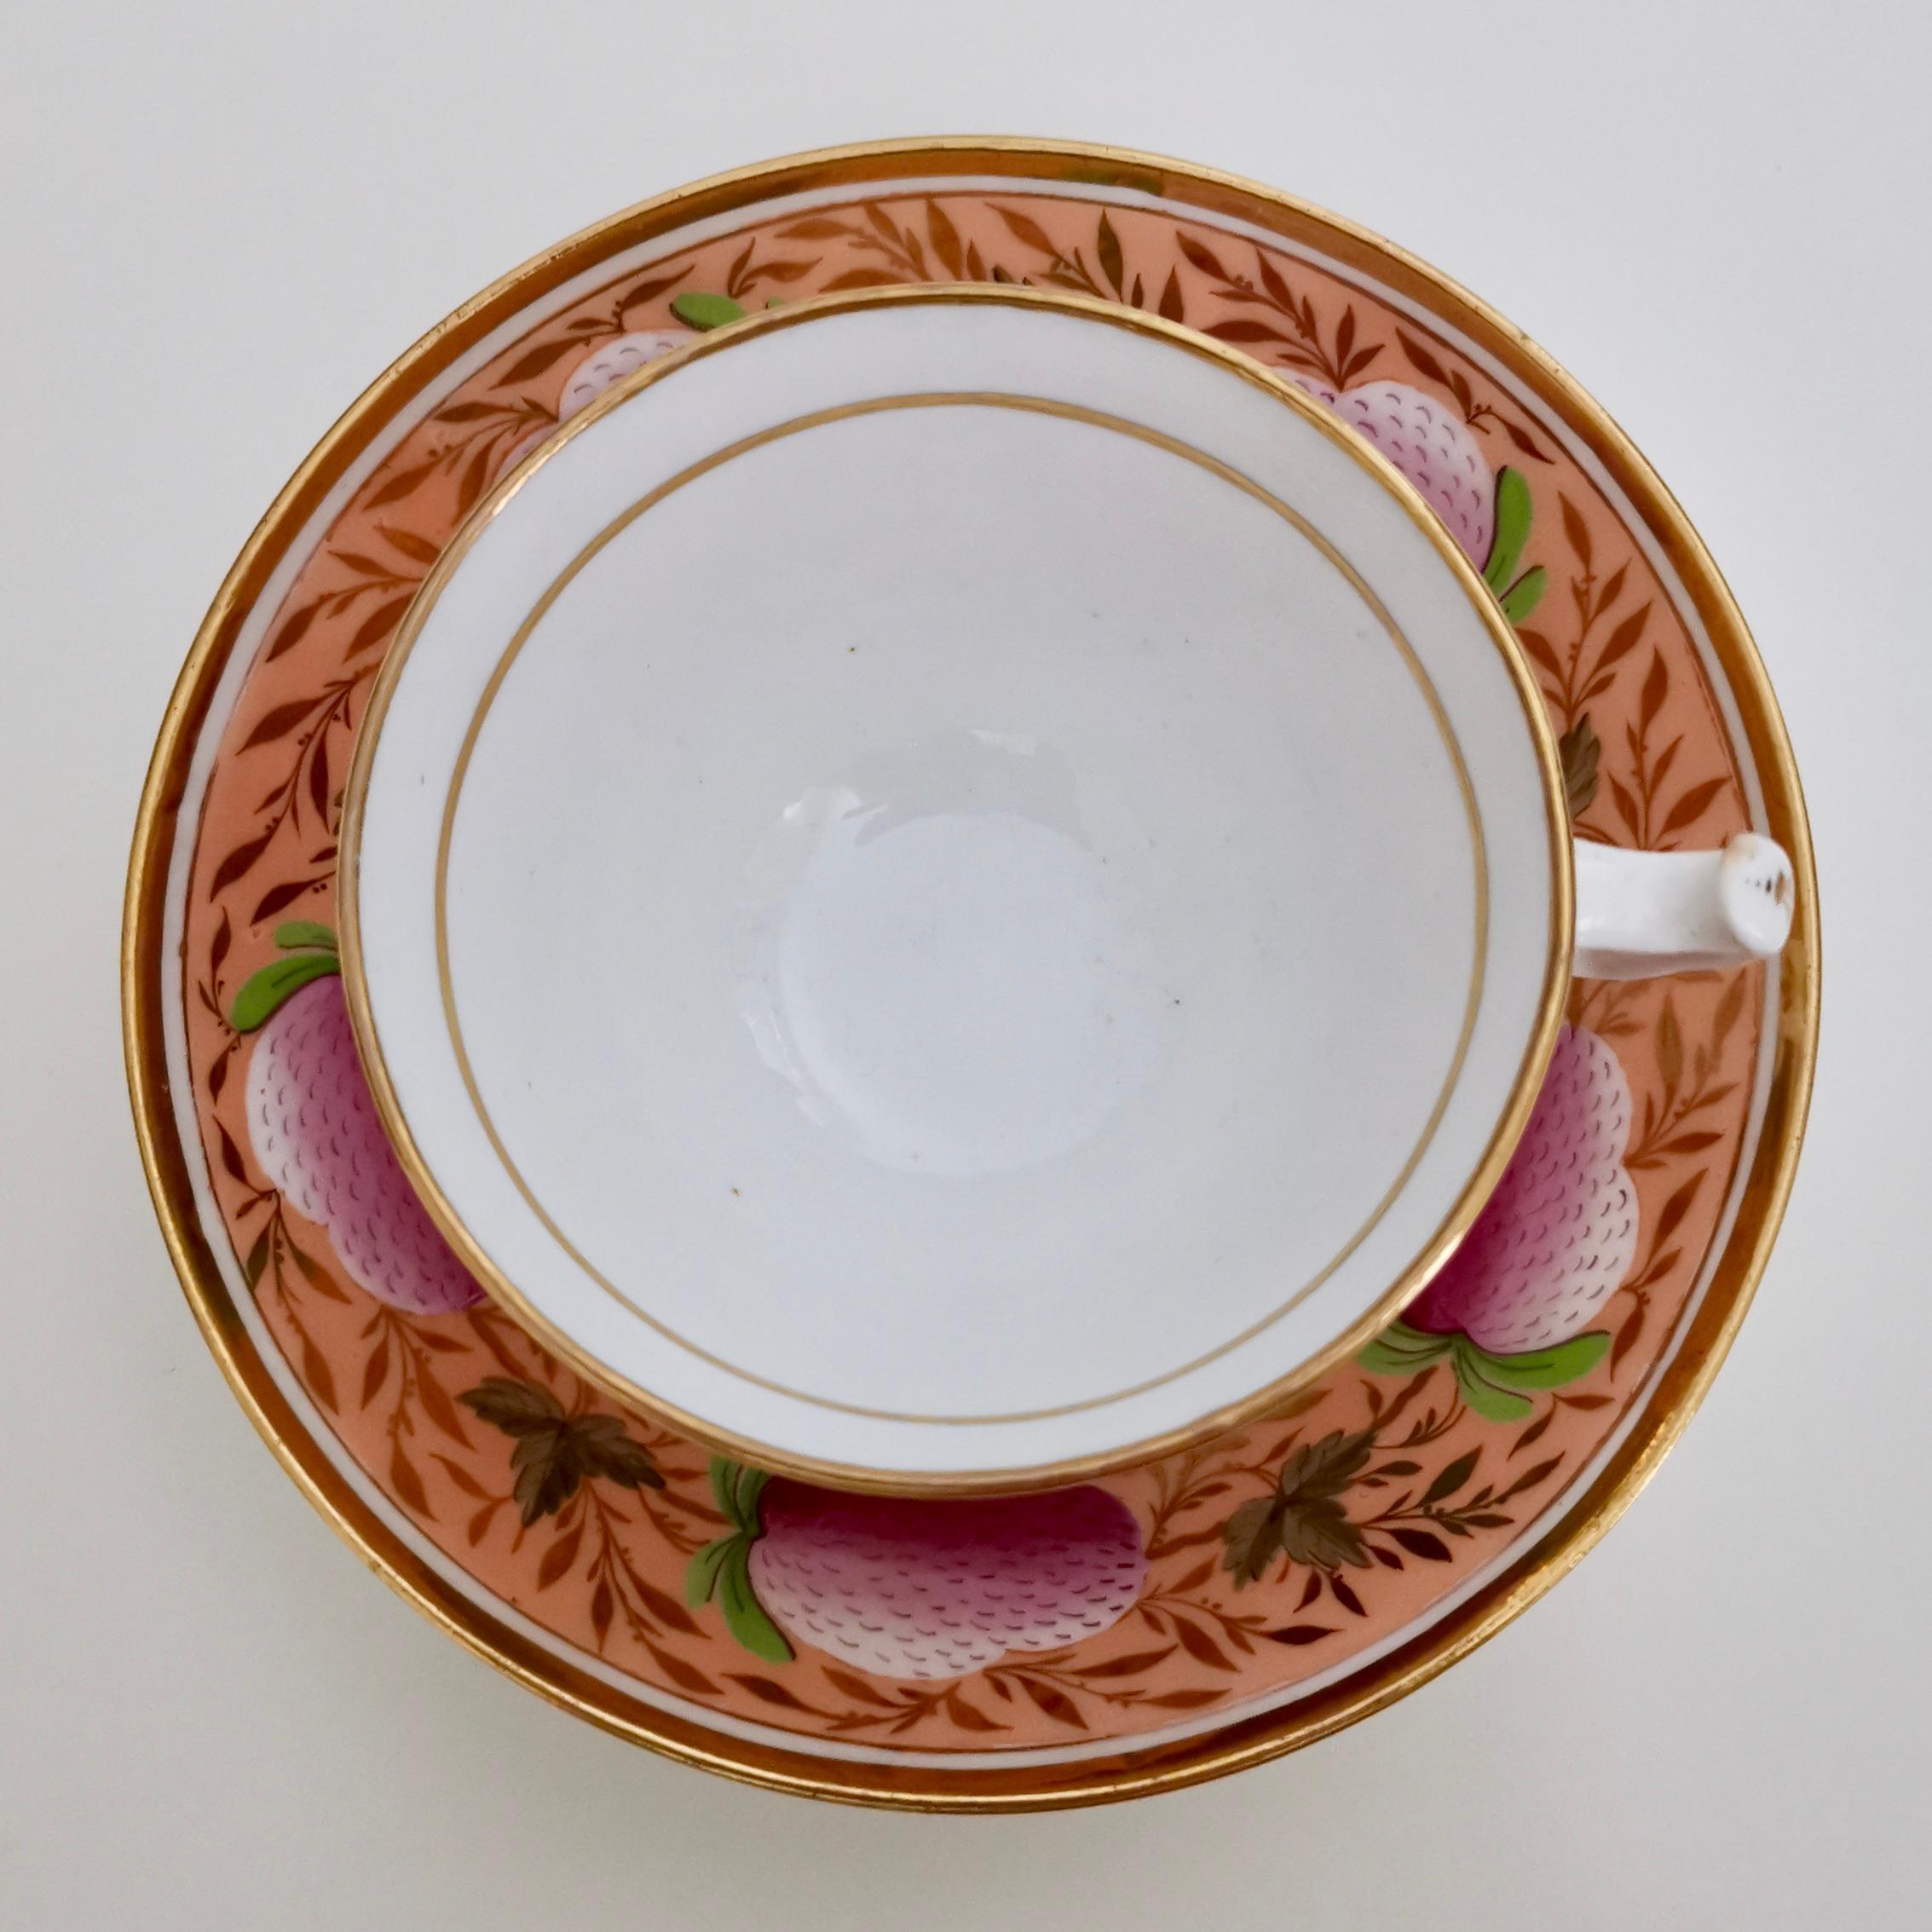 Early 19th Century John Rose Coalport Porcelain Teacup Trio, Pink Strawberries, Regency, circa 1815